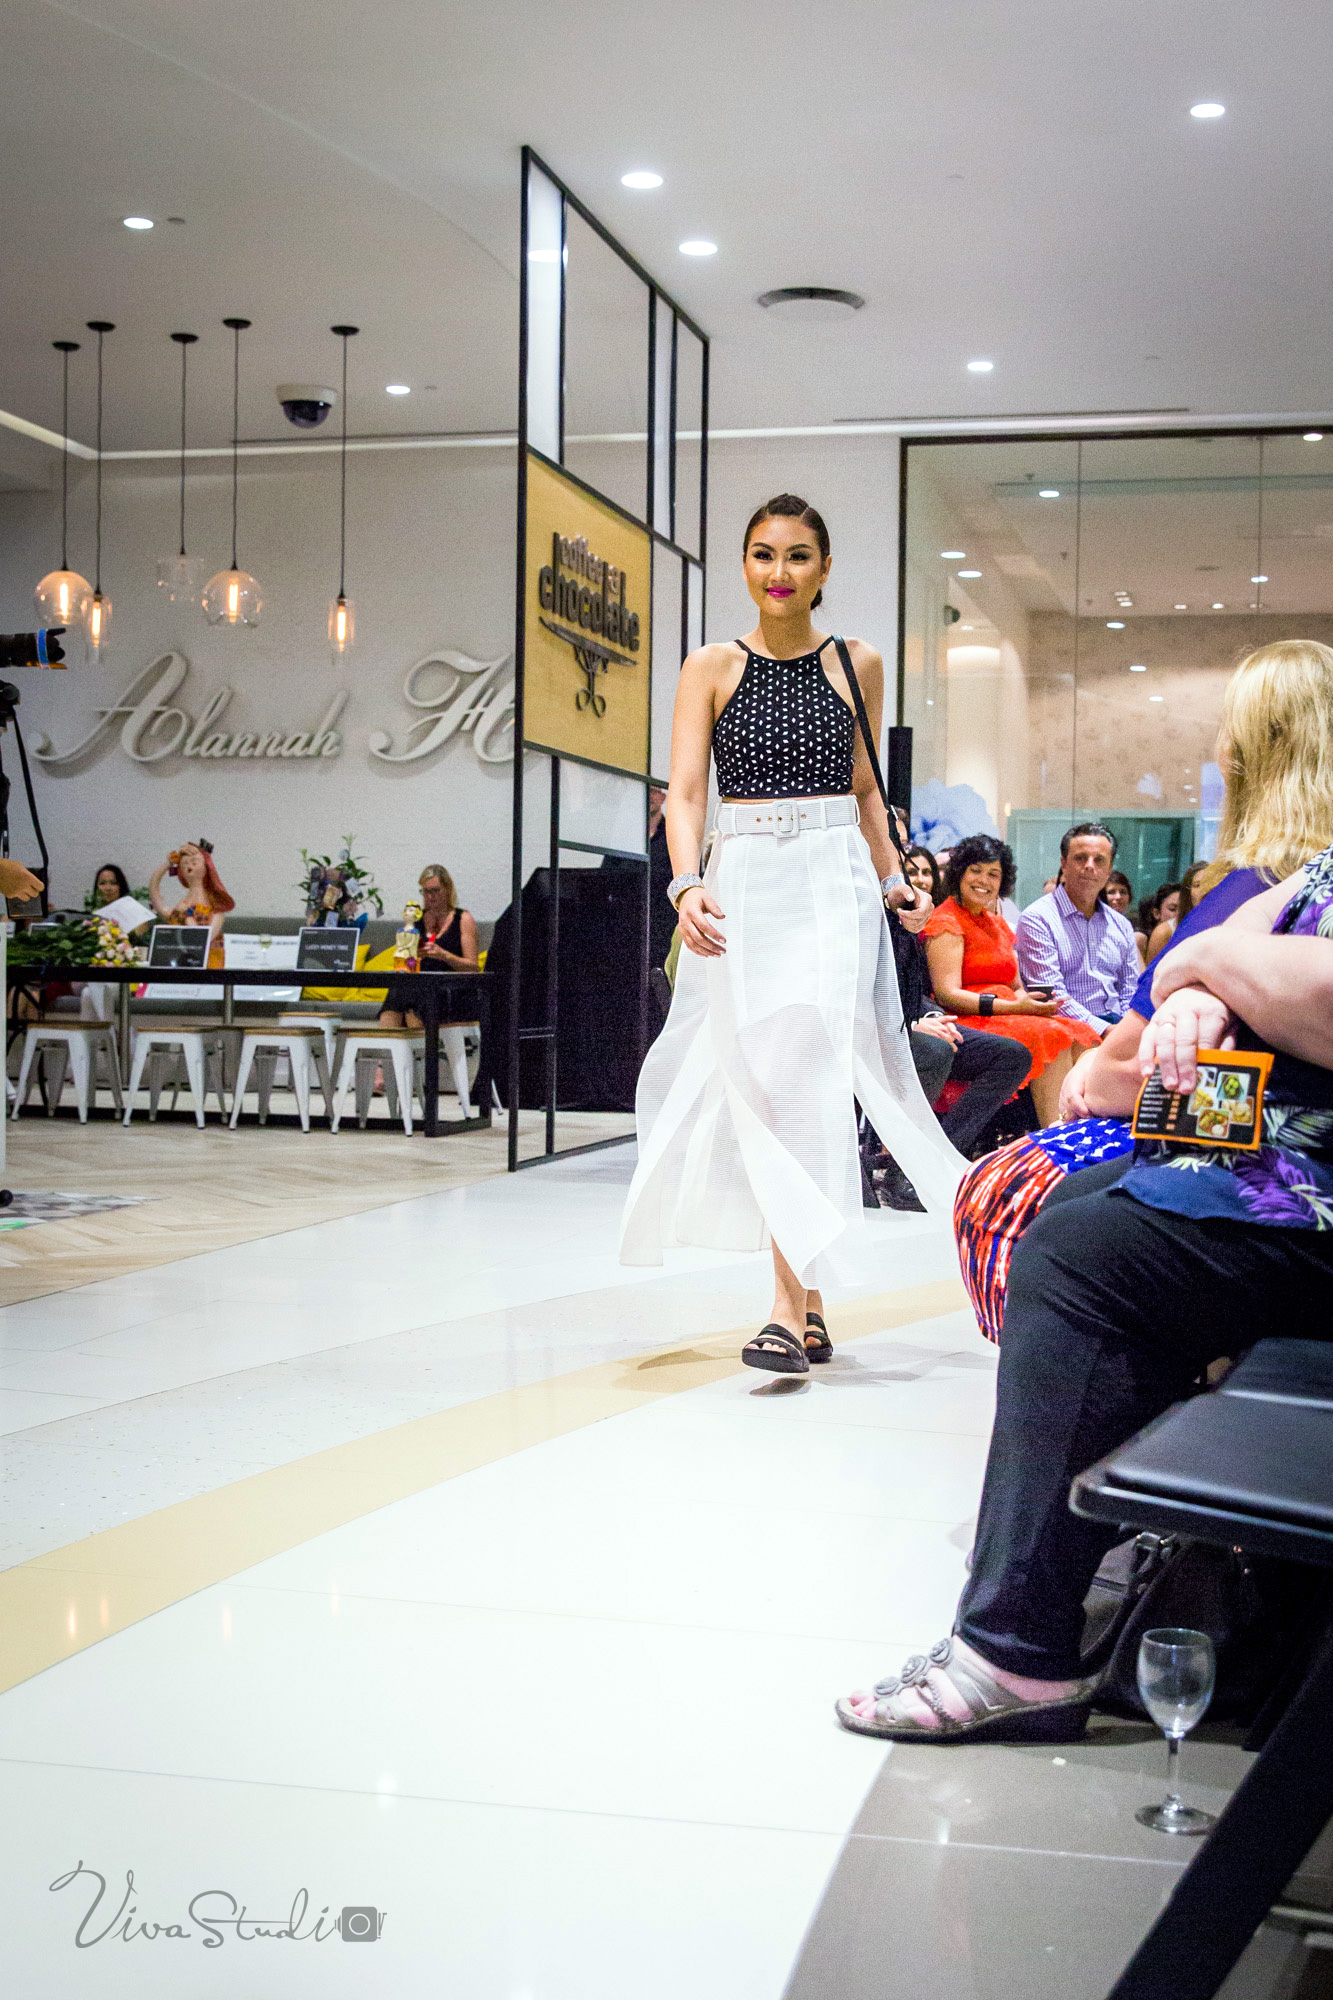 VivaStudio_Design_Photograpphy_Brisbane_Event_Fashionable_20151105_0226